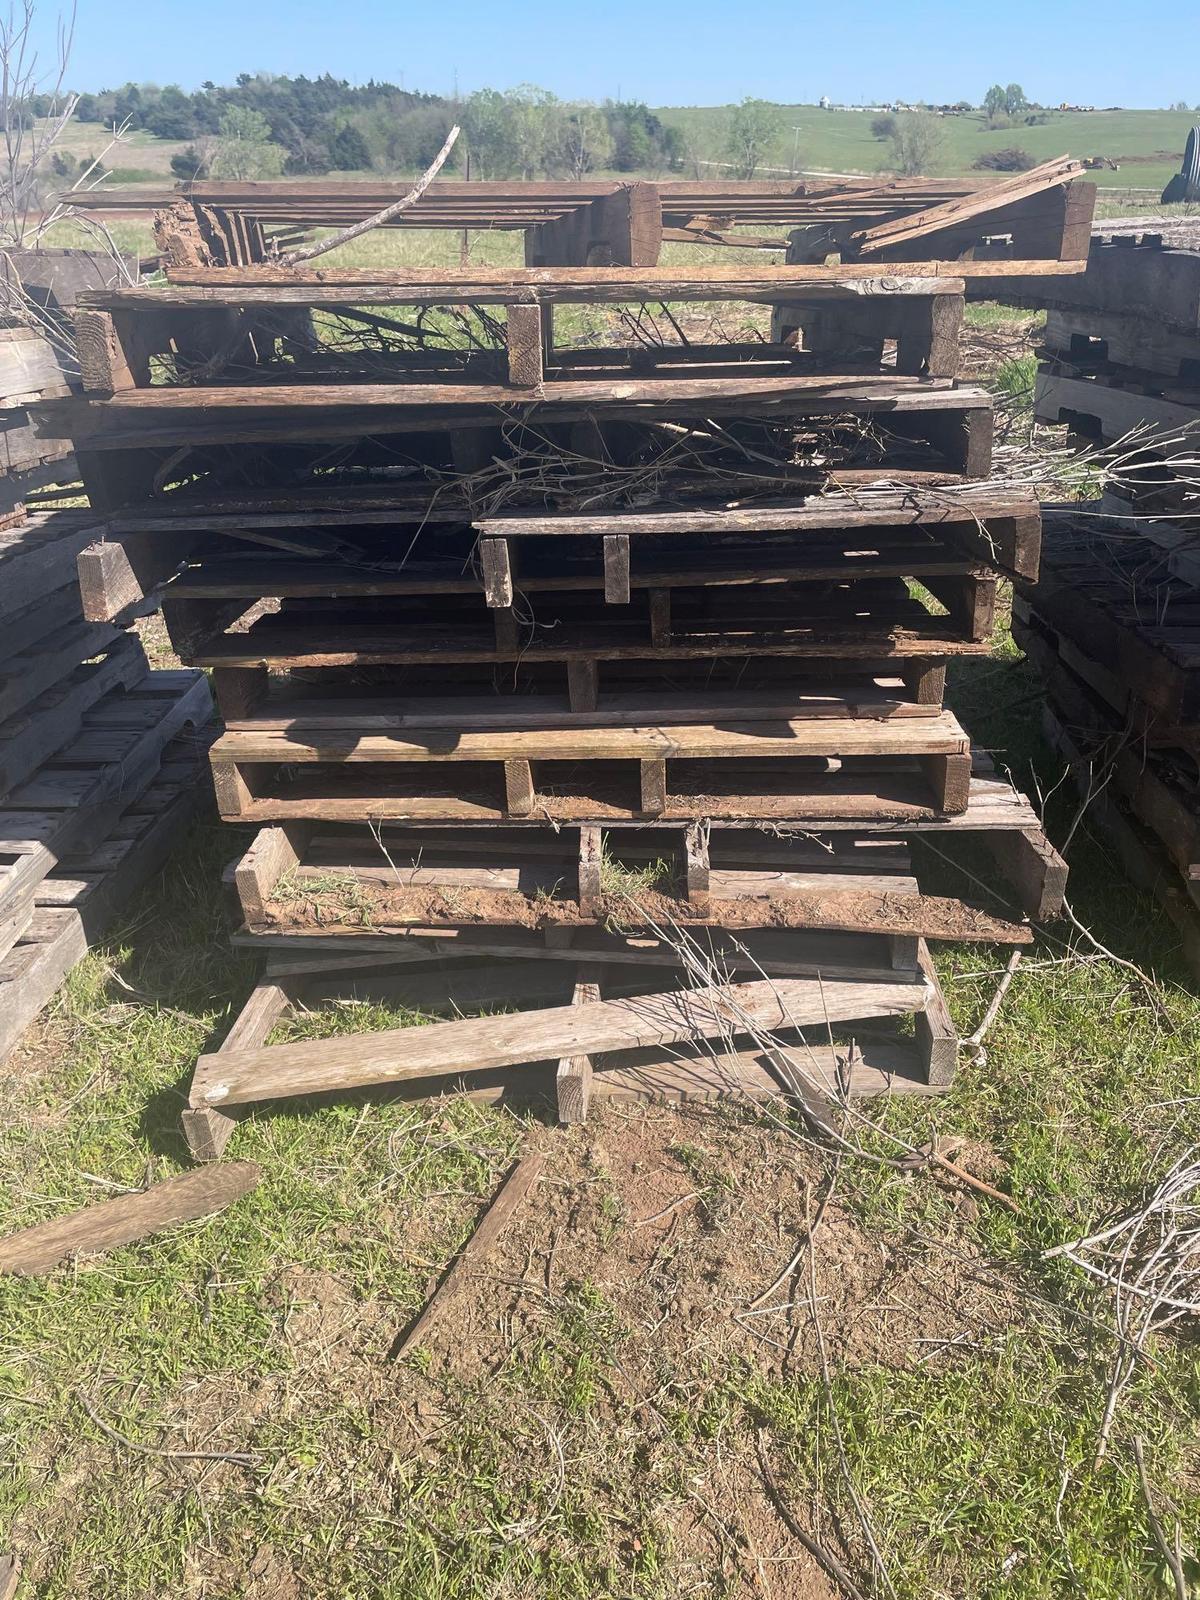 10 wooden pallets